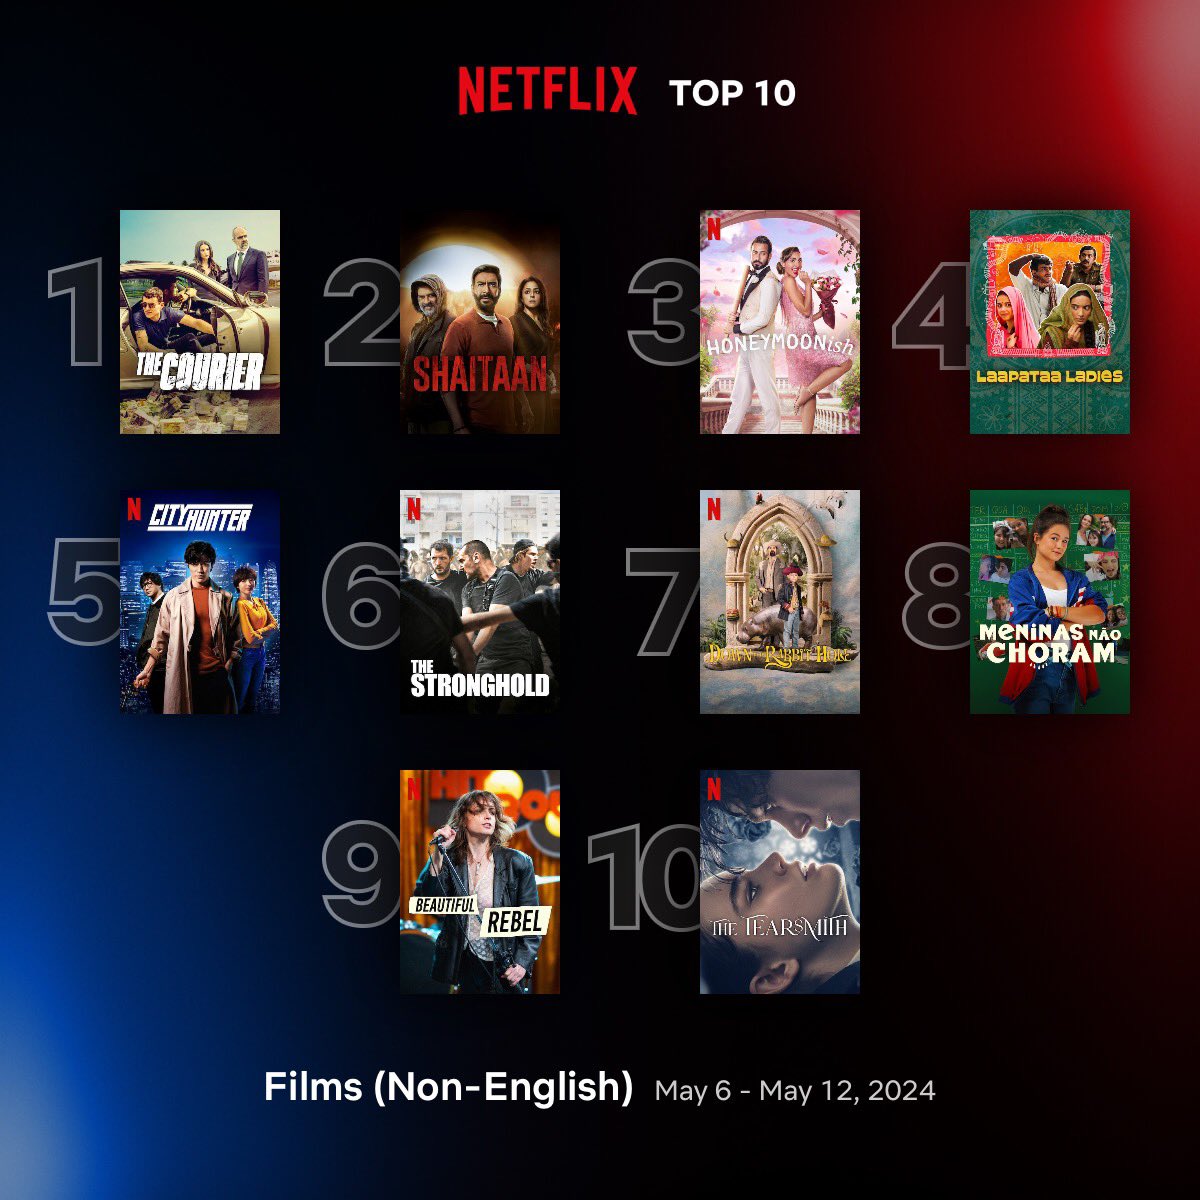 Global Top 10 Non-English Films on Netflix between 6 - 12 May 1. #TheCourier / #ElCorreo 🇪🇸 🇧🇪 🇫🇷 2. #Shaitaan 🇮🇳 3. #Honeymoonish 🇰🇼 4. #LaapataaLadies 🇮🇳 5. #CityHunter   🇯🇵 6. #TheStronghold 🇫🇷 7. #DownTheRabbitHole 🇲🇽 8. #MeninasNãoChoram 🇧🇷 9. #BeautifulRebel 🇮🇹 10.